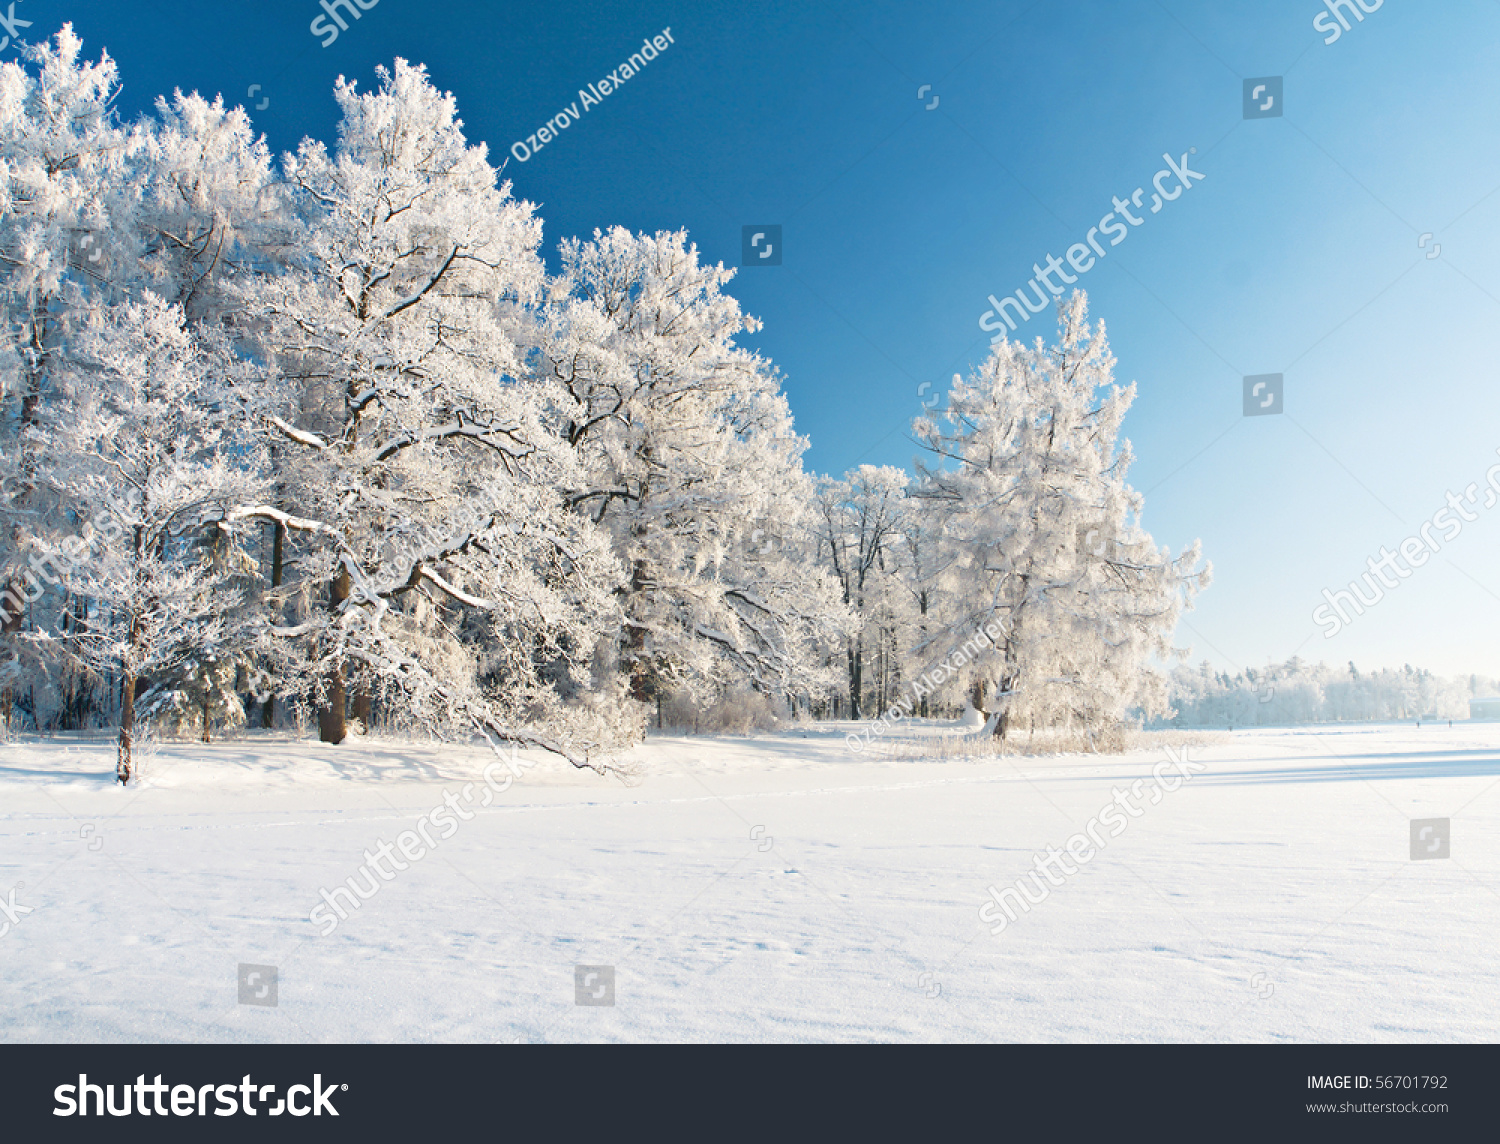 Winter park in snow #56701792